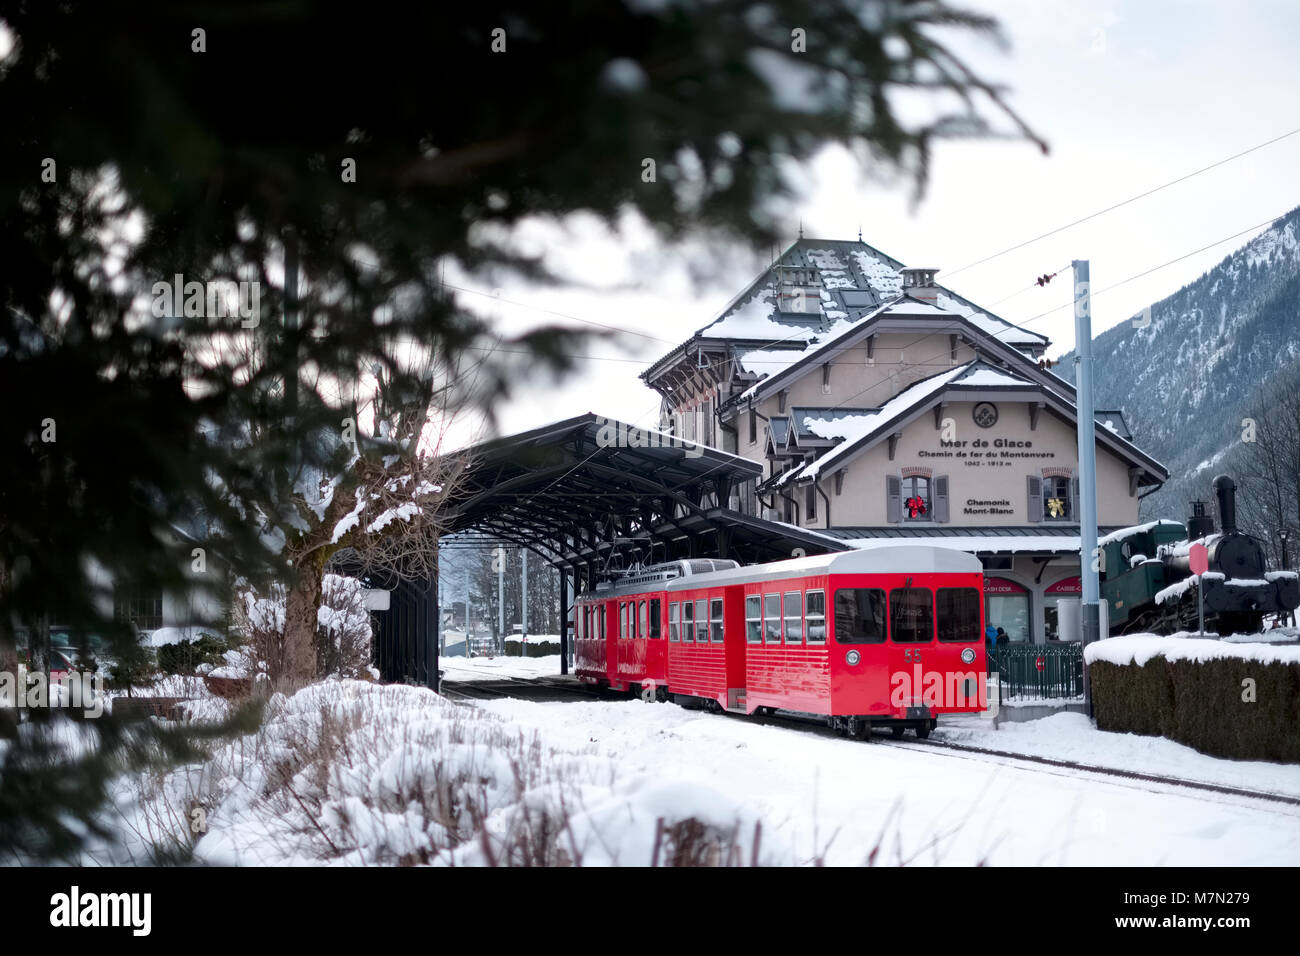 The Montenvers Railway or Chemin de fer du Montenvers in Chamonix, France Stock Photo